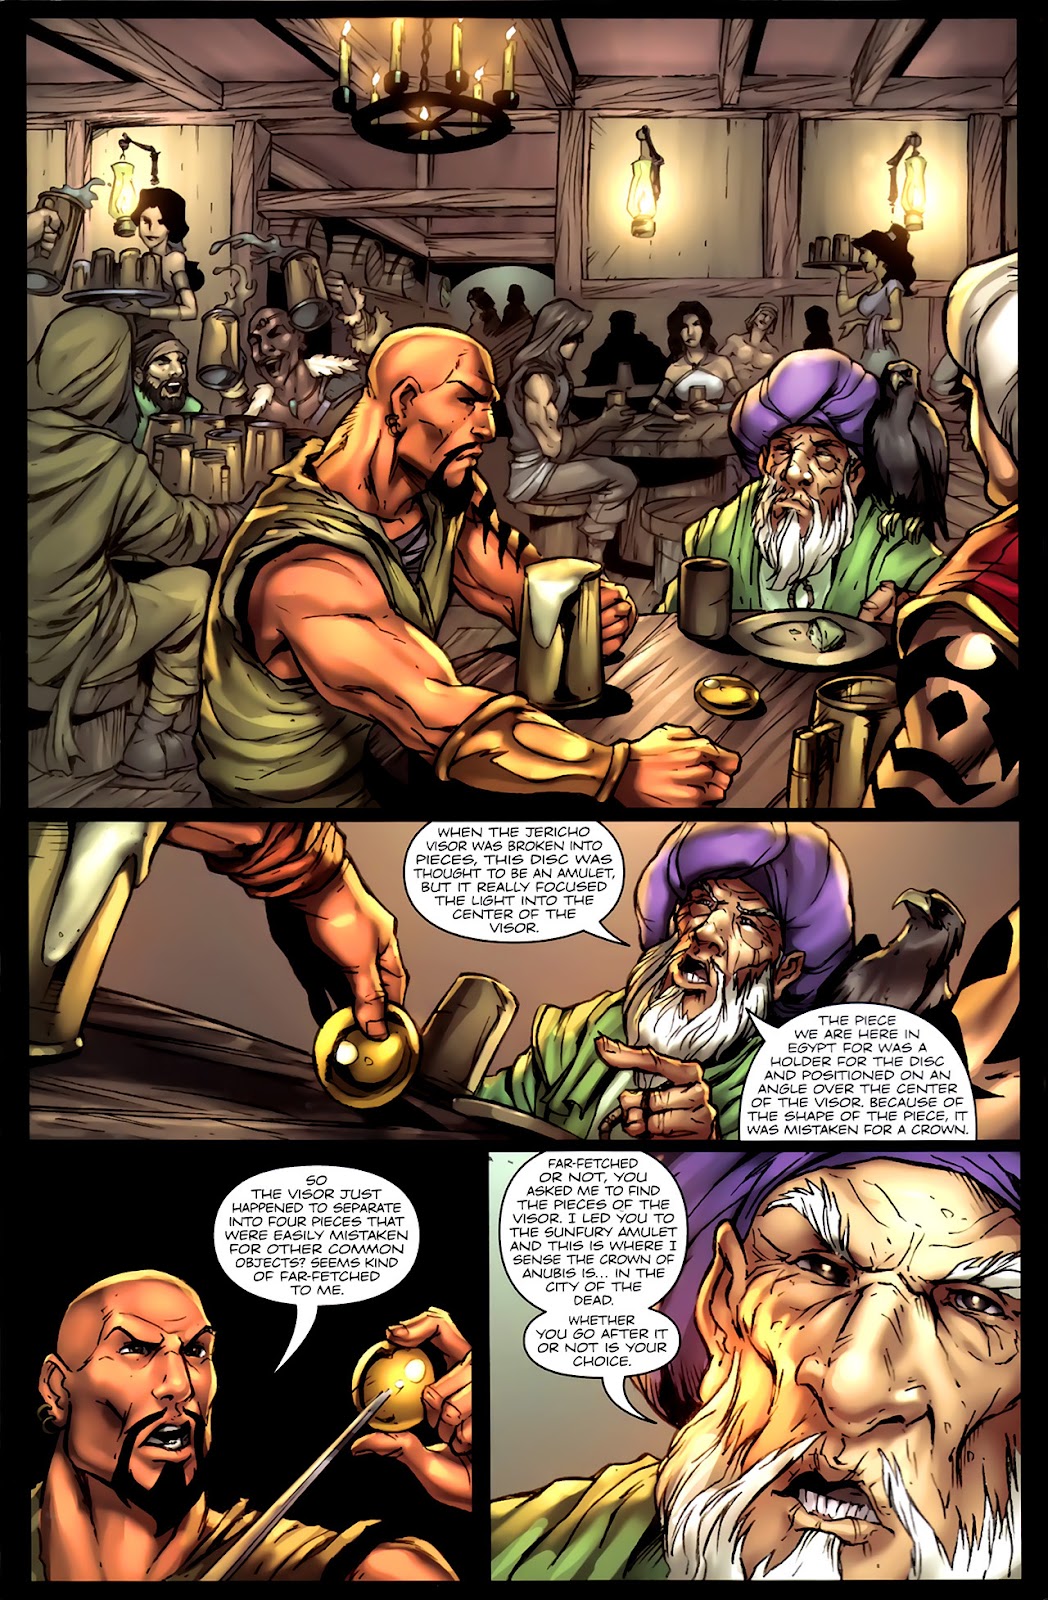 Leituras de BD/ Reading Comics: 1001 Arabian Nights: The Adventures of  Sinbad Vol.1 - Eyes of Fire